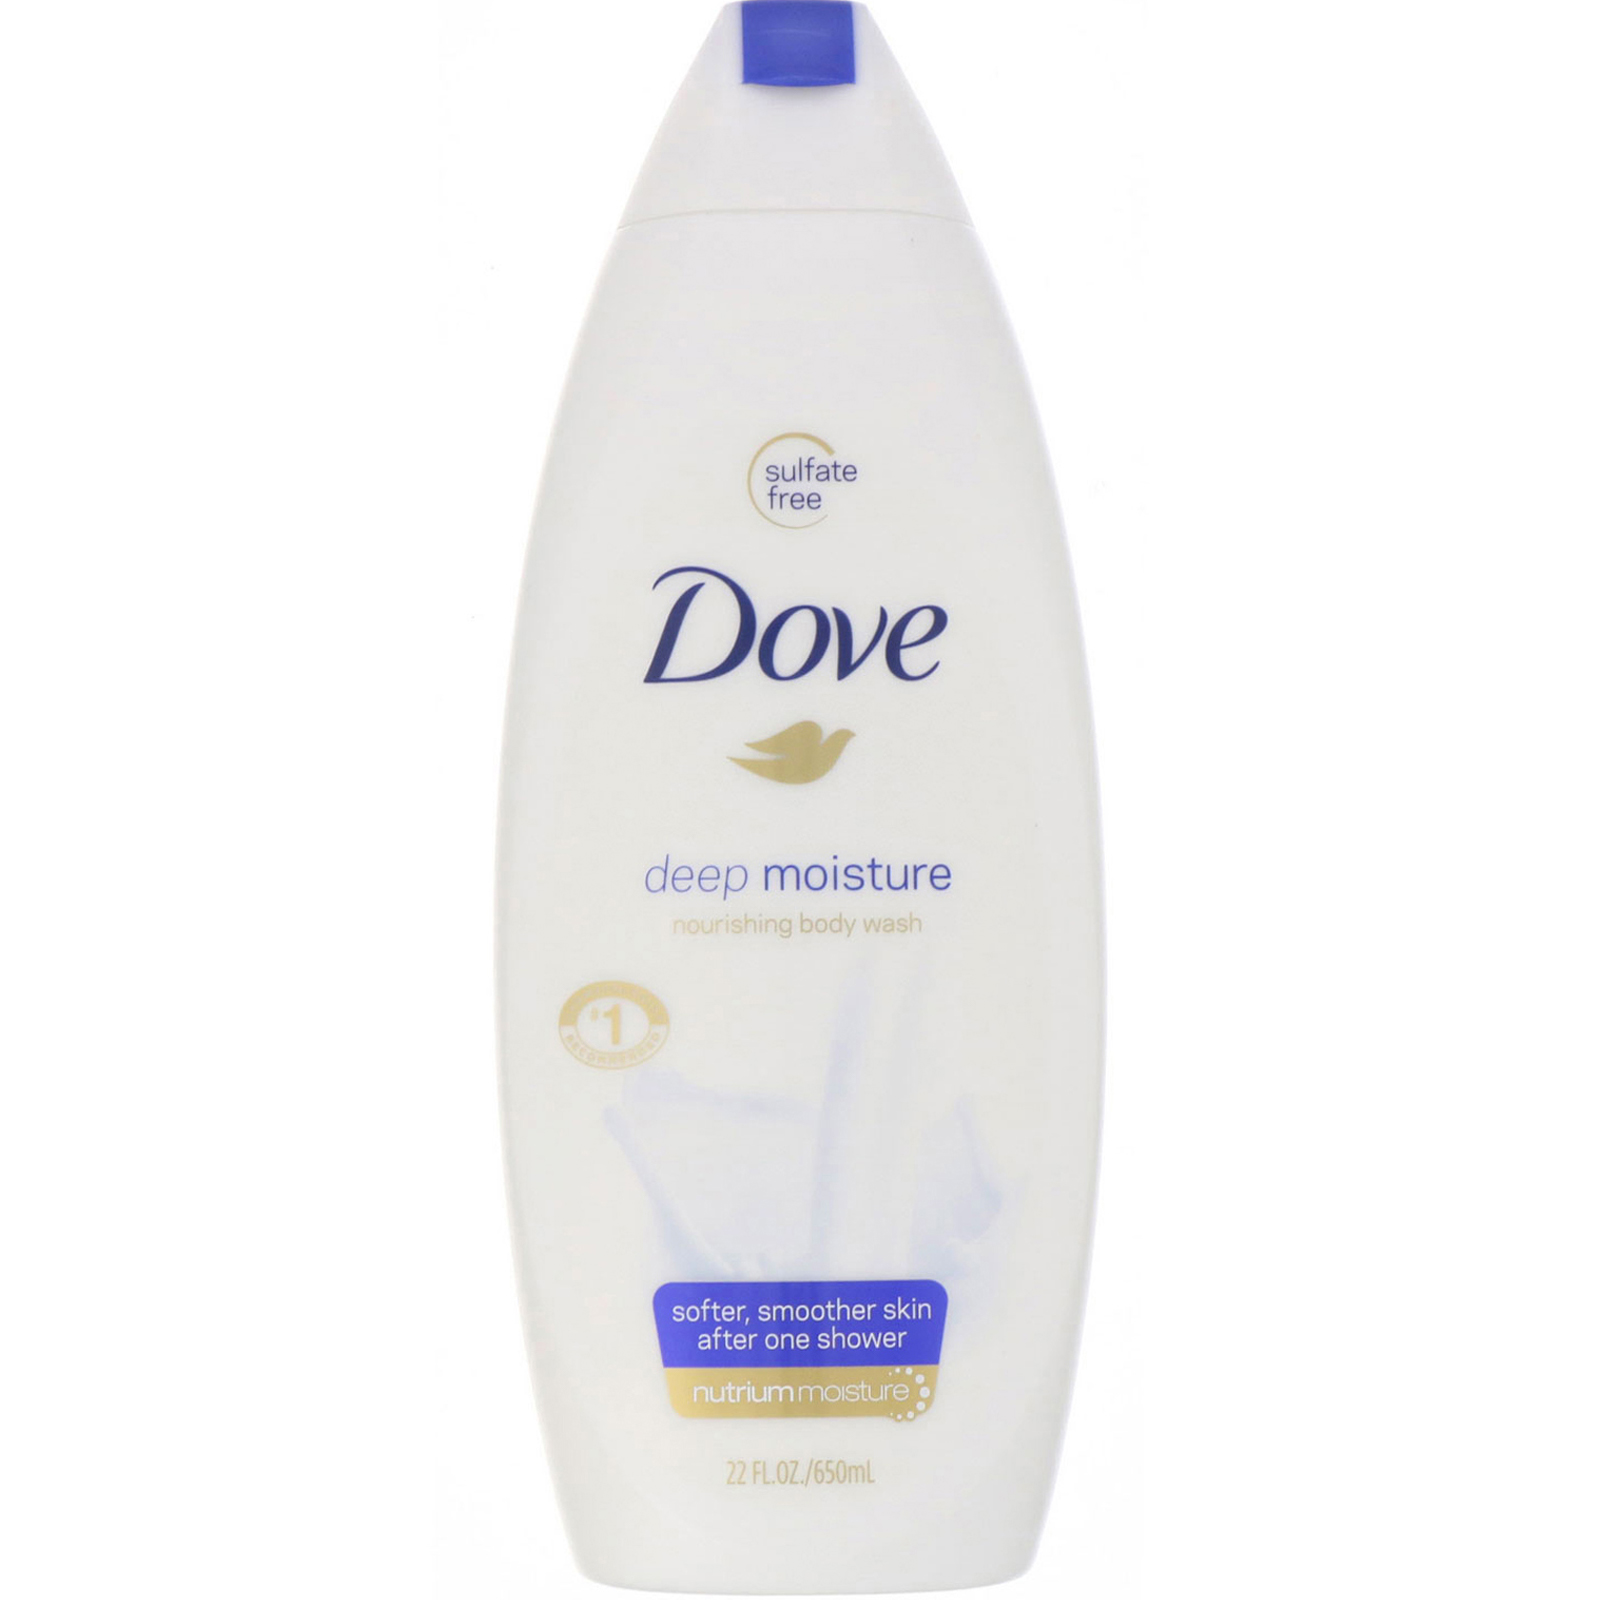 Dove Deep Moisture Nourishing Body Wash 22 fl oz 650 ml | eBay